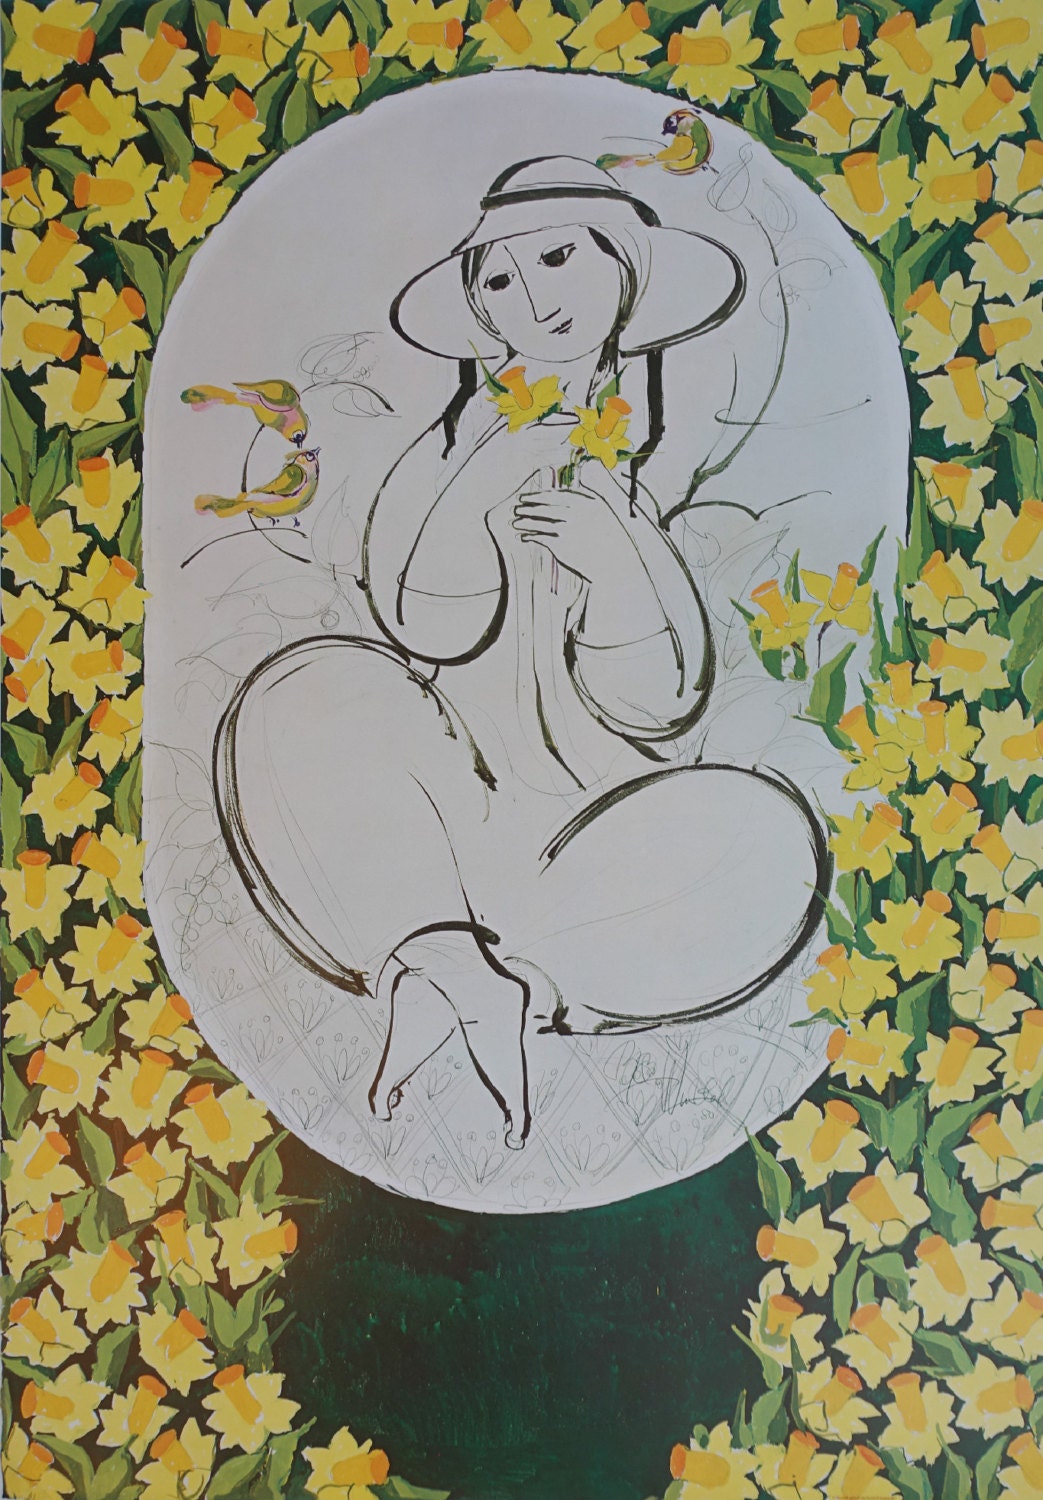 1980 Wiinblad Nature Girl - Original Vintage Poster